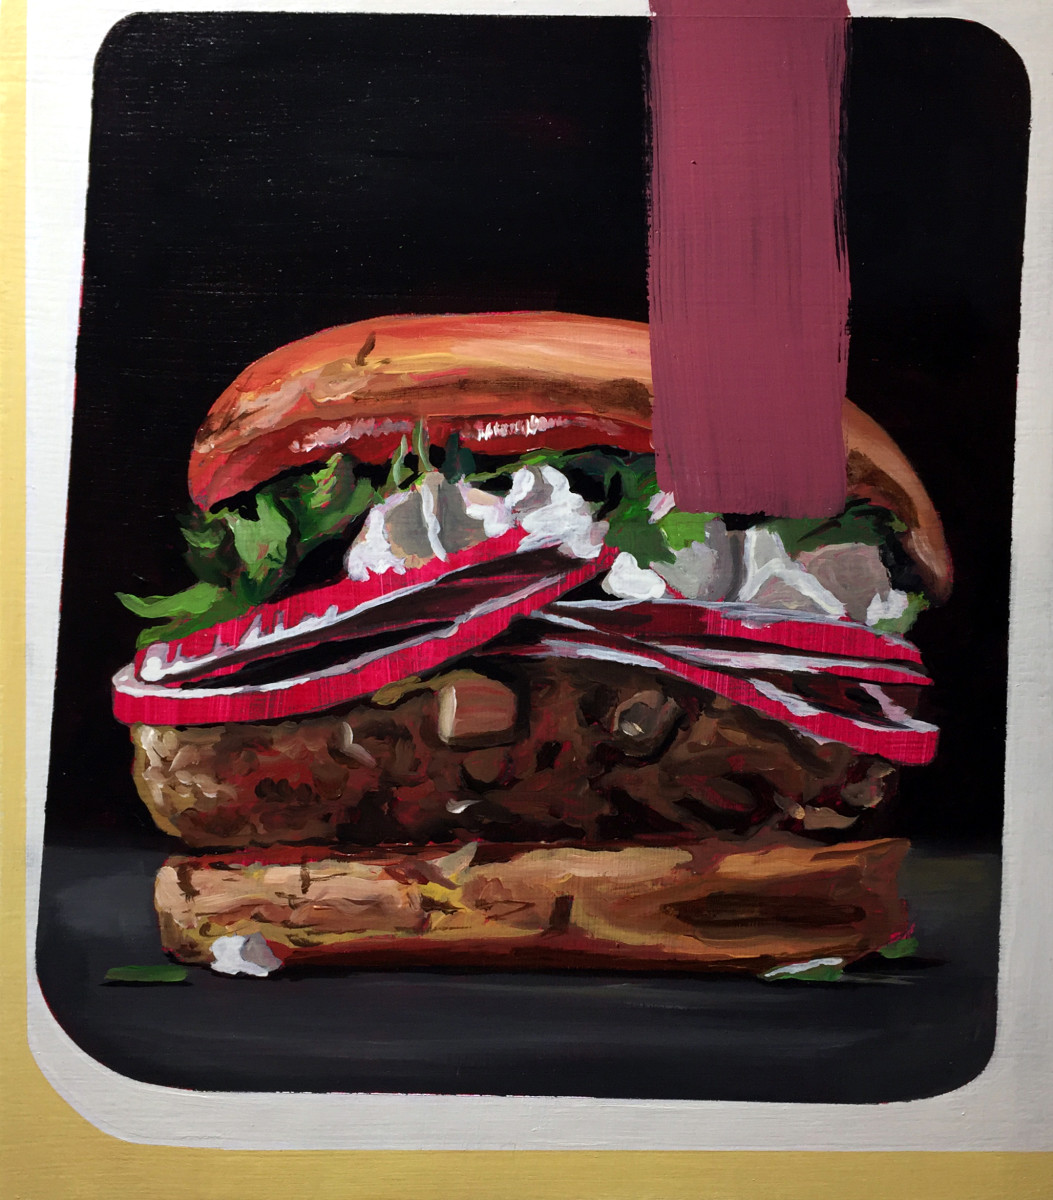 The Ideal Burger by Mathew Tucker 